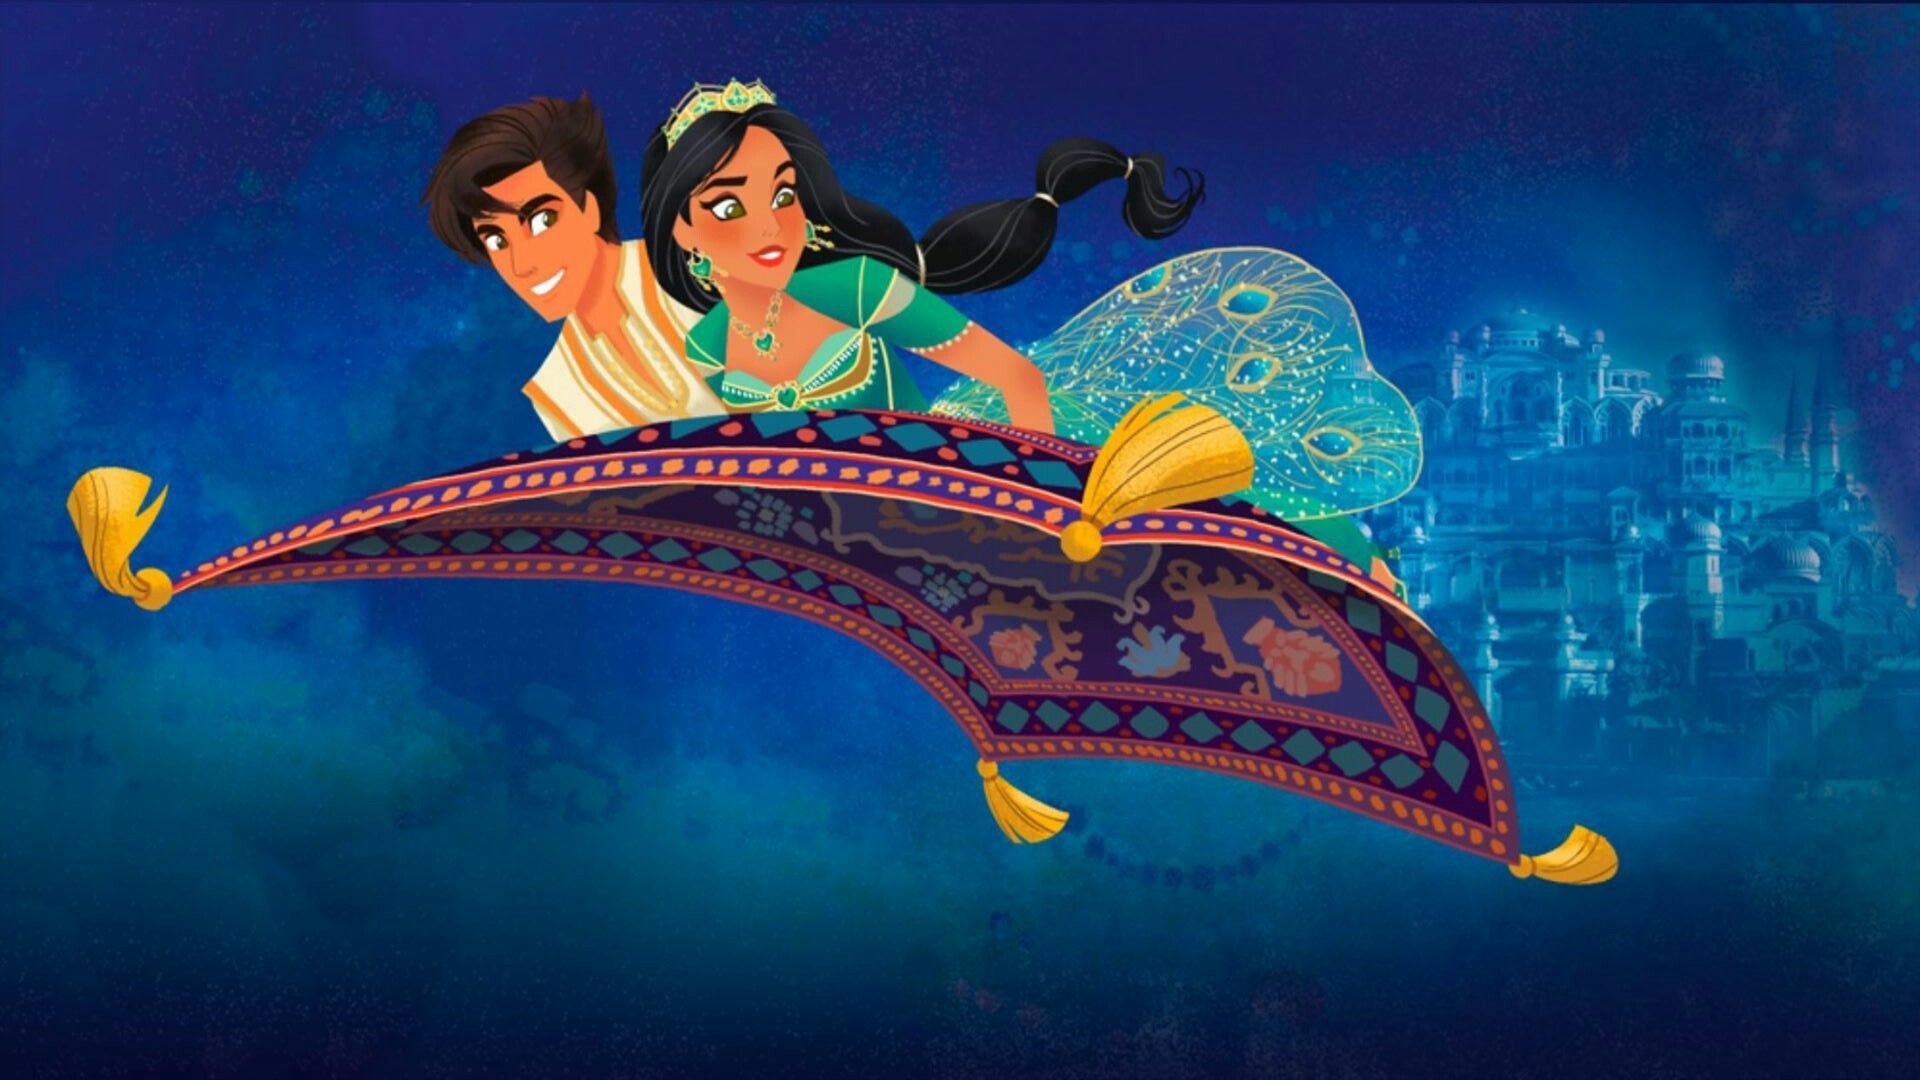 Princess Jasmine and Aladdin on the Magic Carpet ride